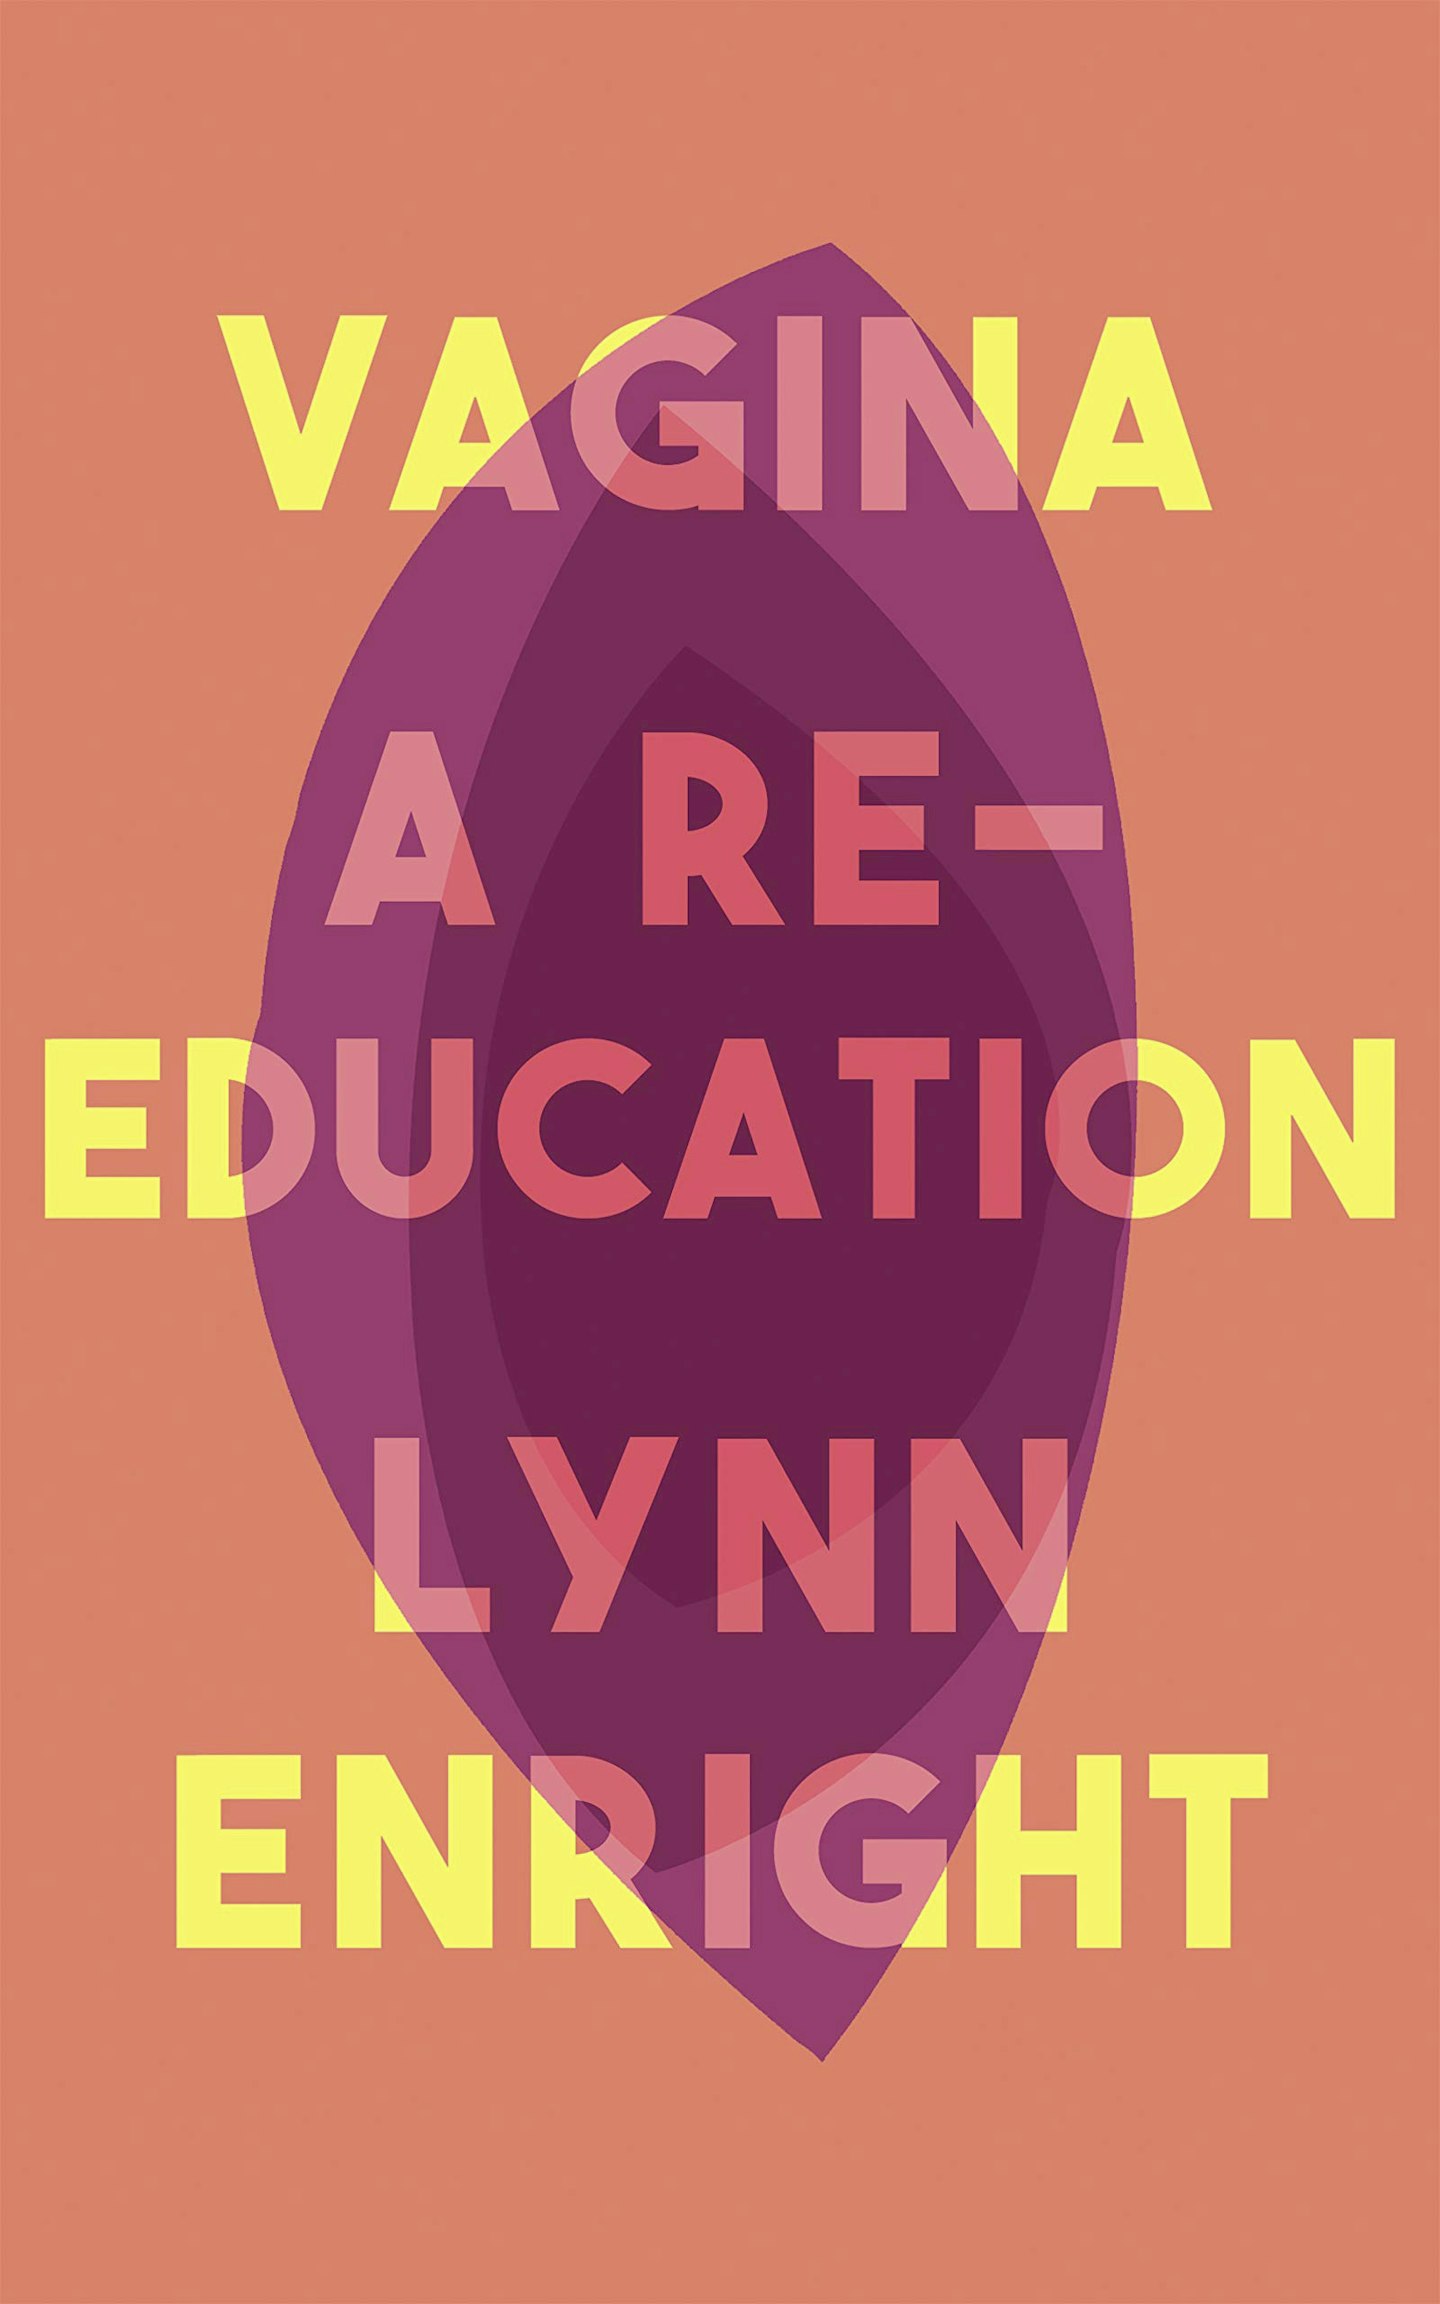 The Vagina: a Re-education - Lynn Enright (Atlantic)